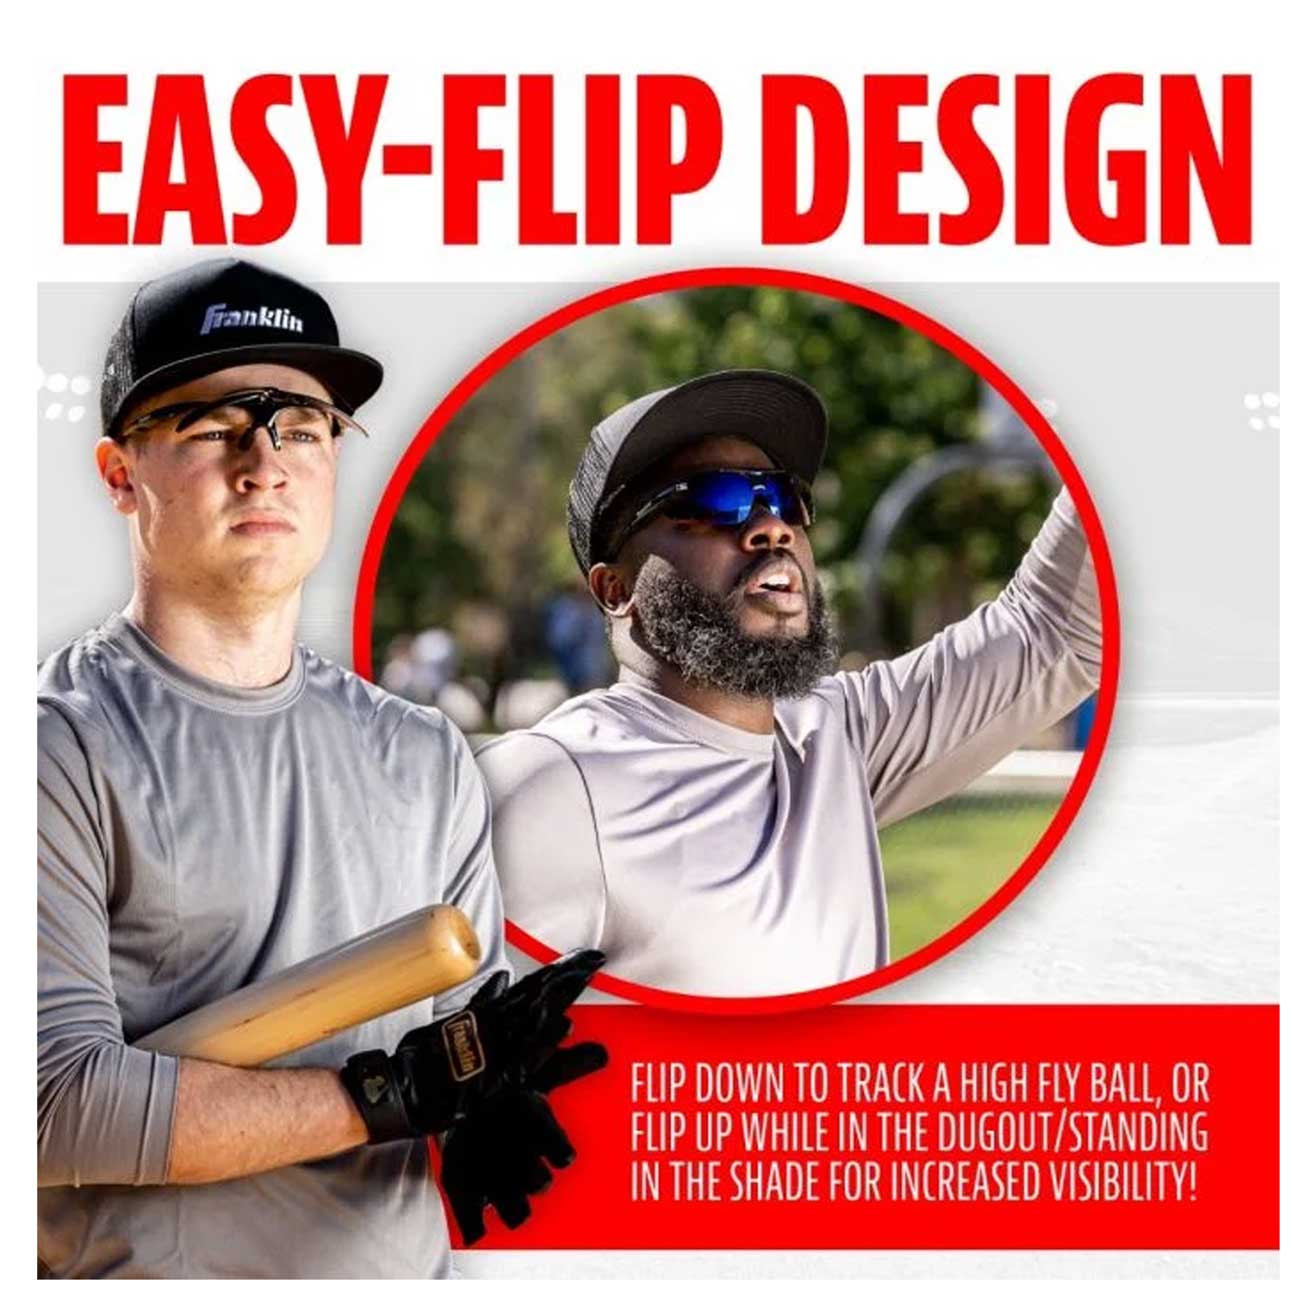 Franklin MLB Deluxe Flip Up Sunglasses